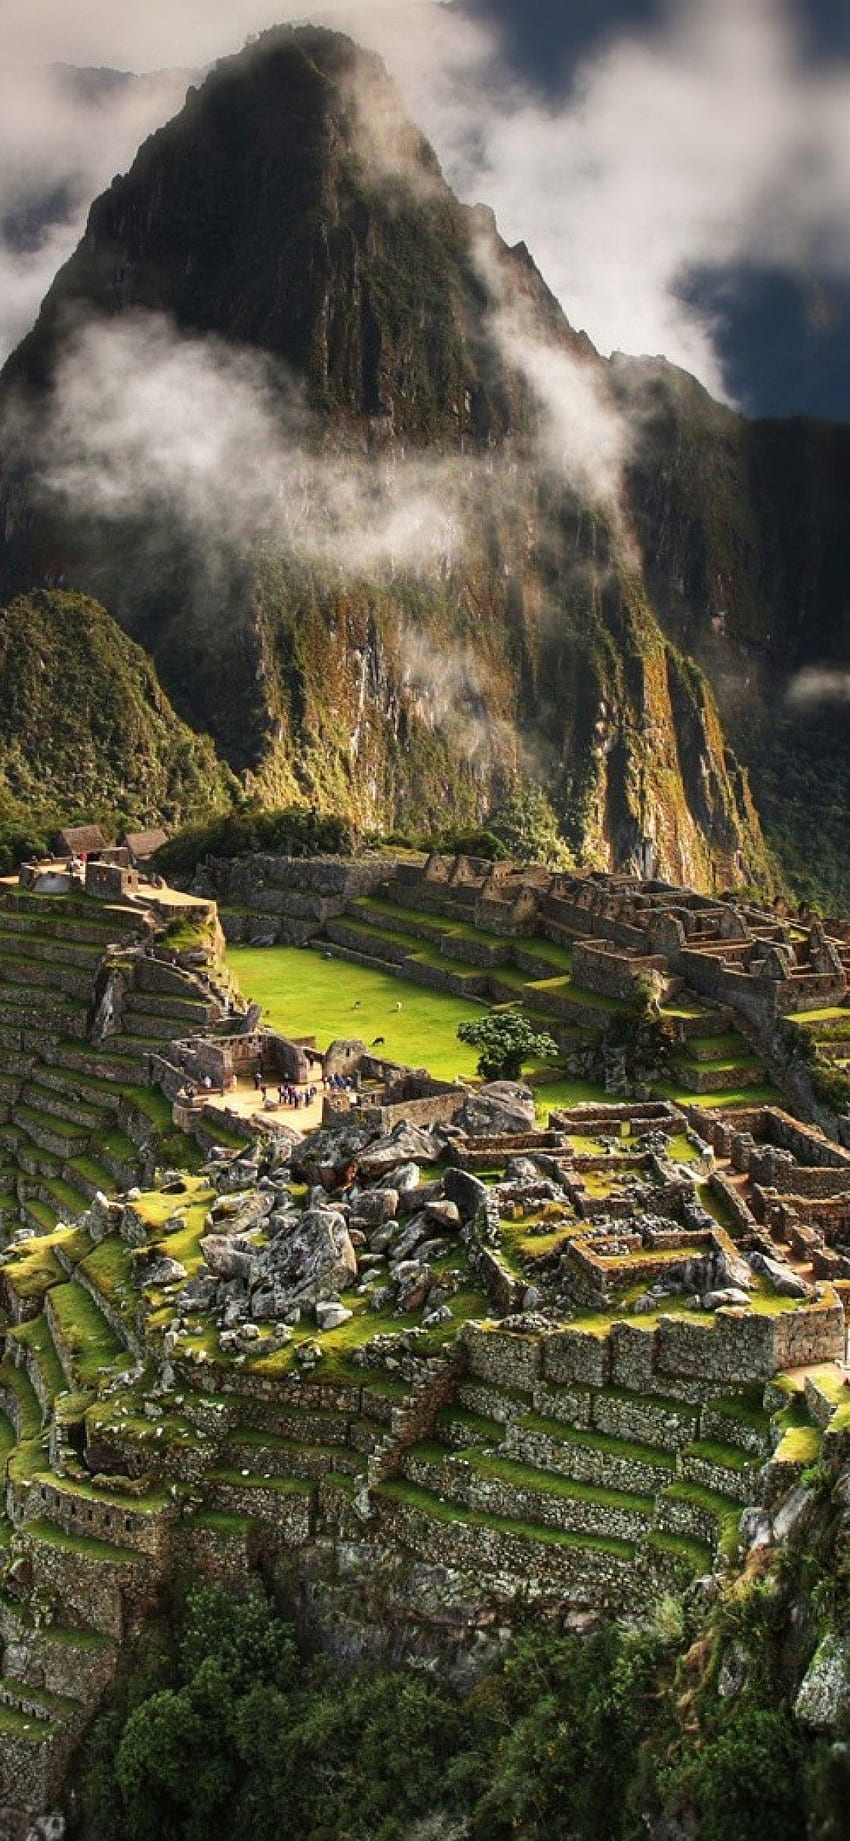 Peru Photos Download The BEST Free Peru Stock Photos  HD Images